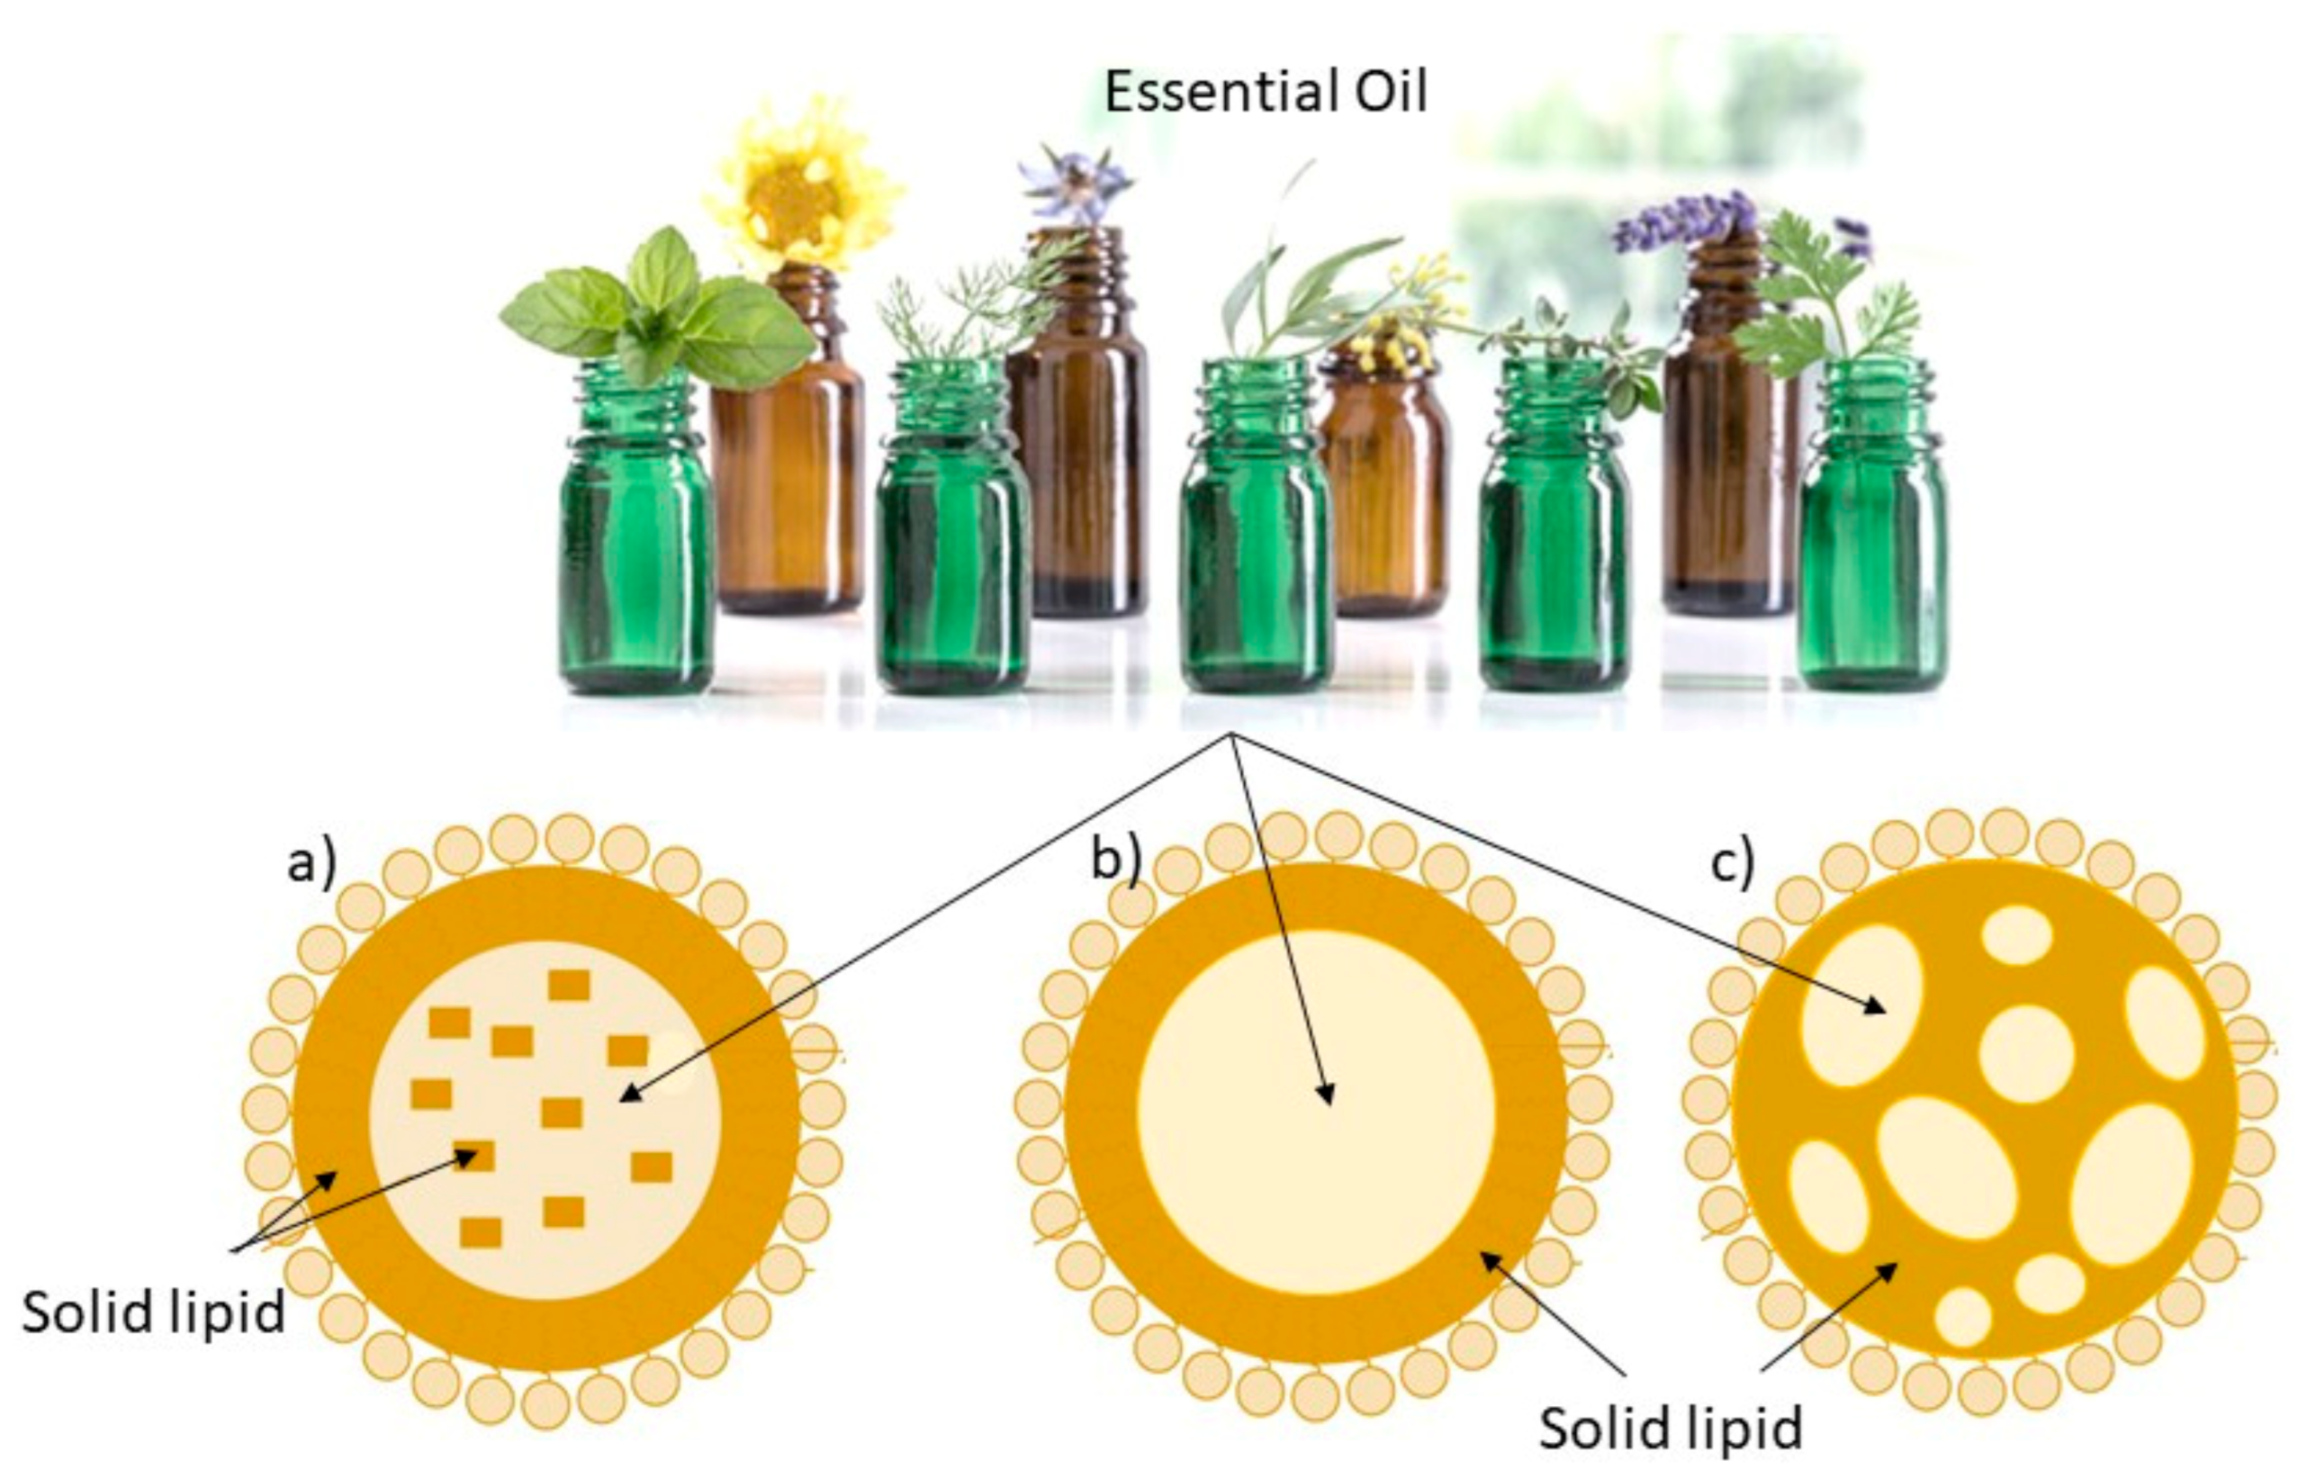 Breath Aromatherapy Essentials Blend - 100% Pure Essential Oils – Rising  Sun Botanicals